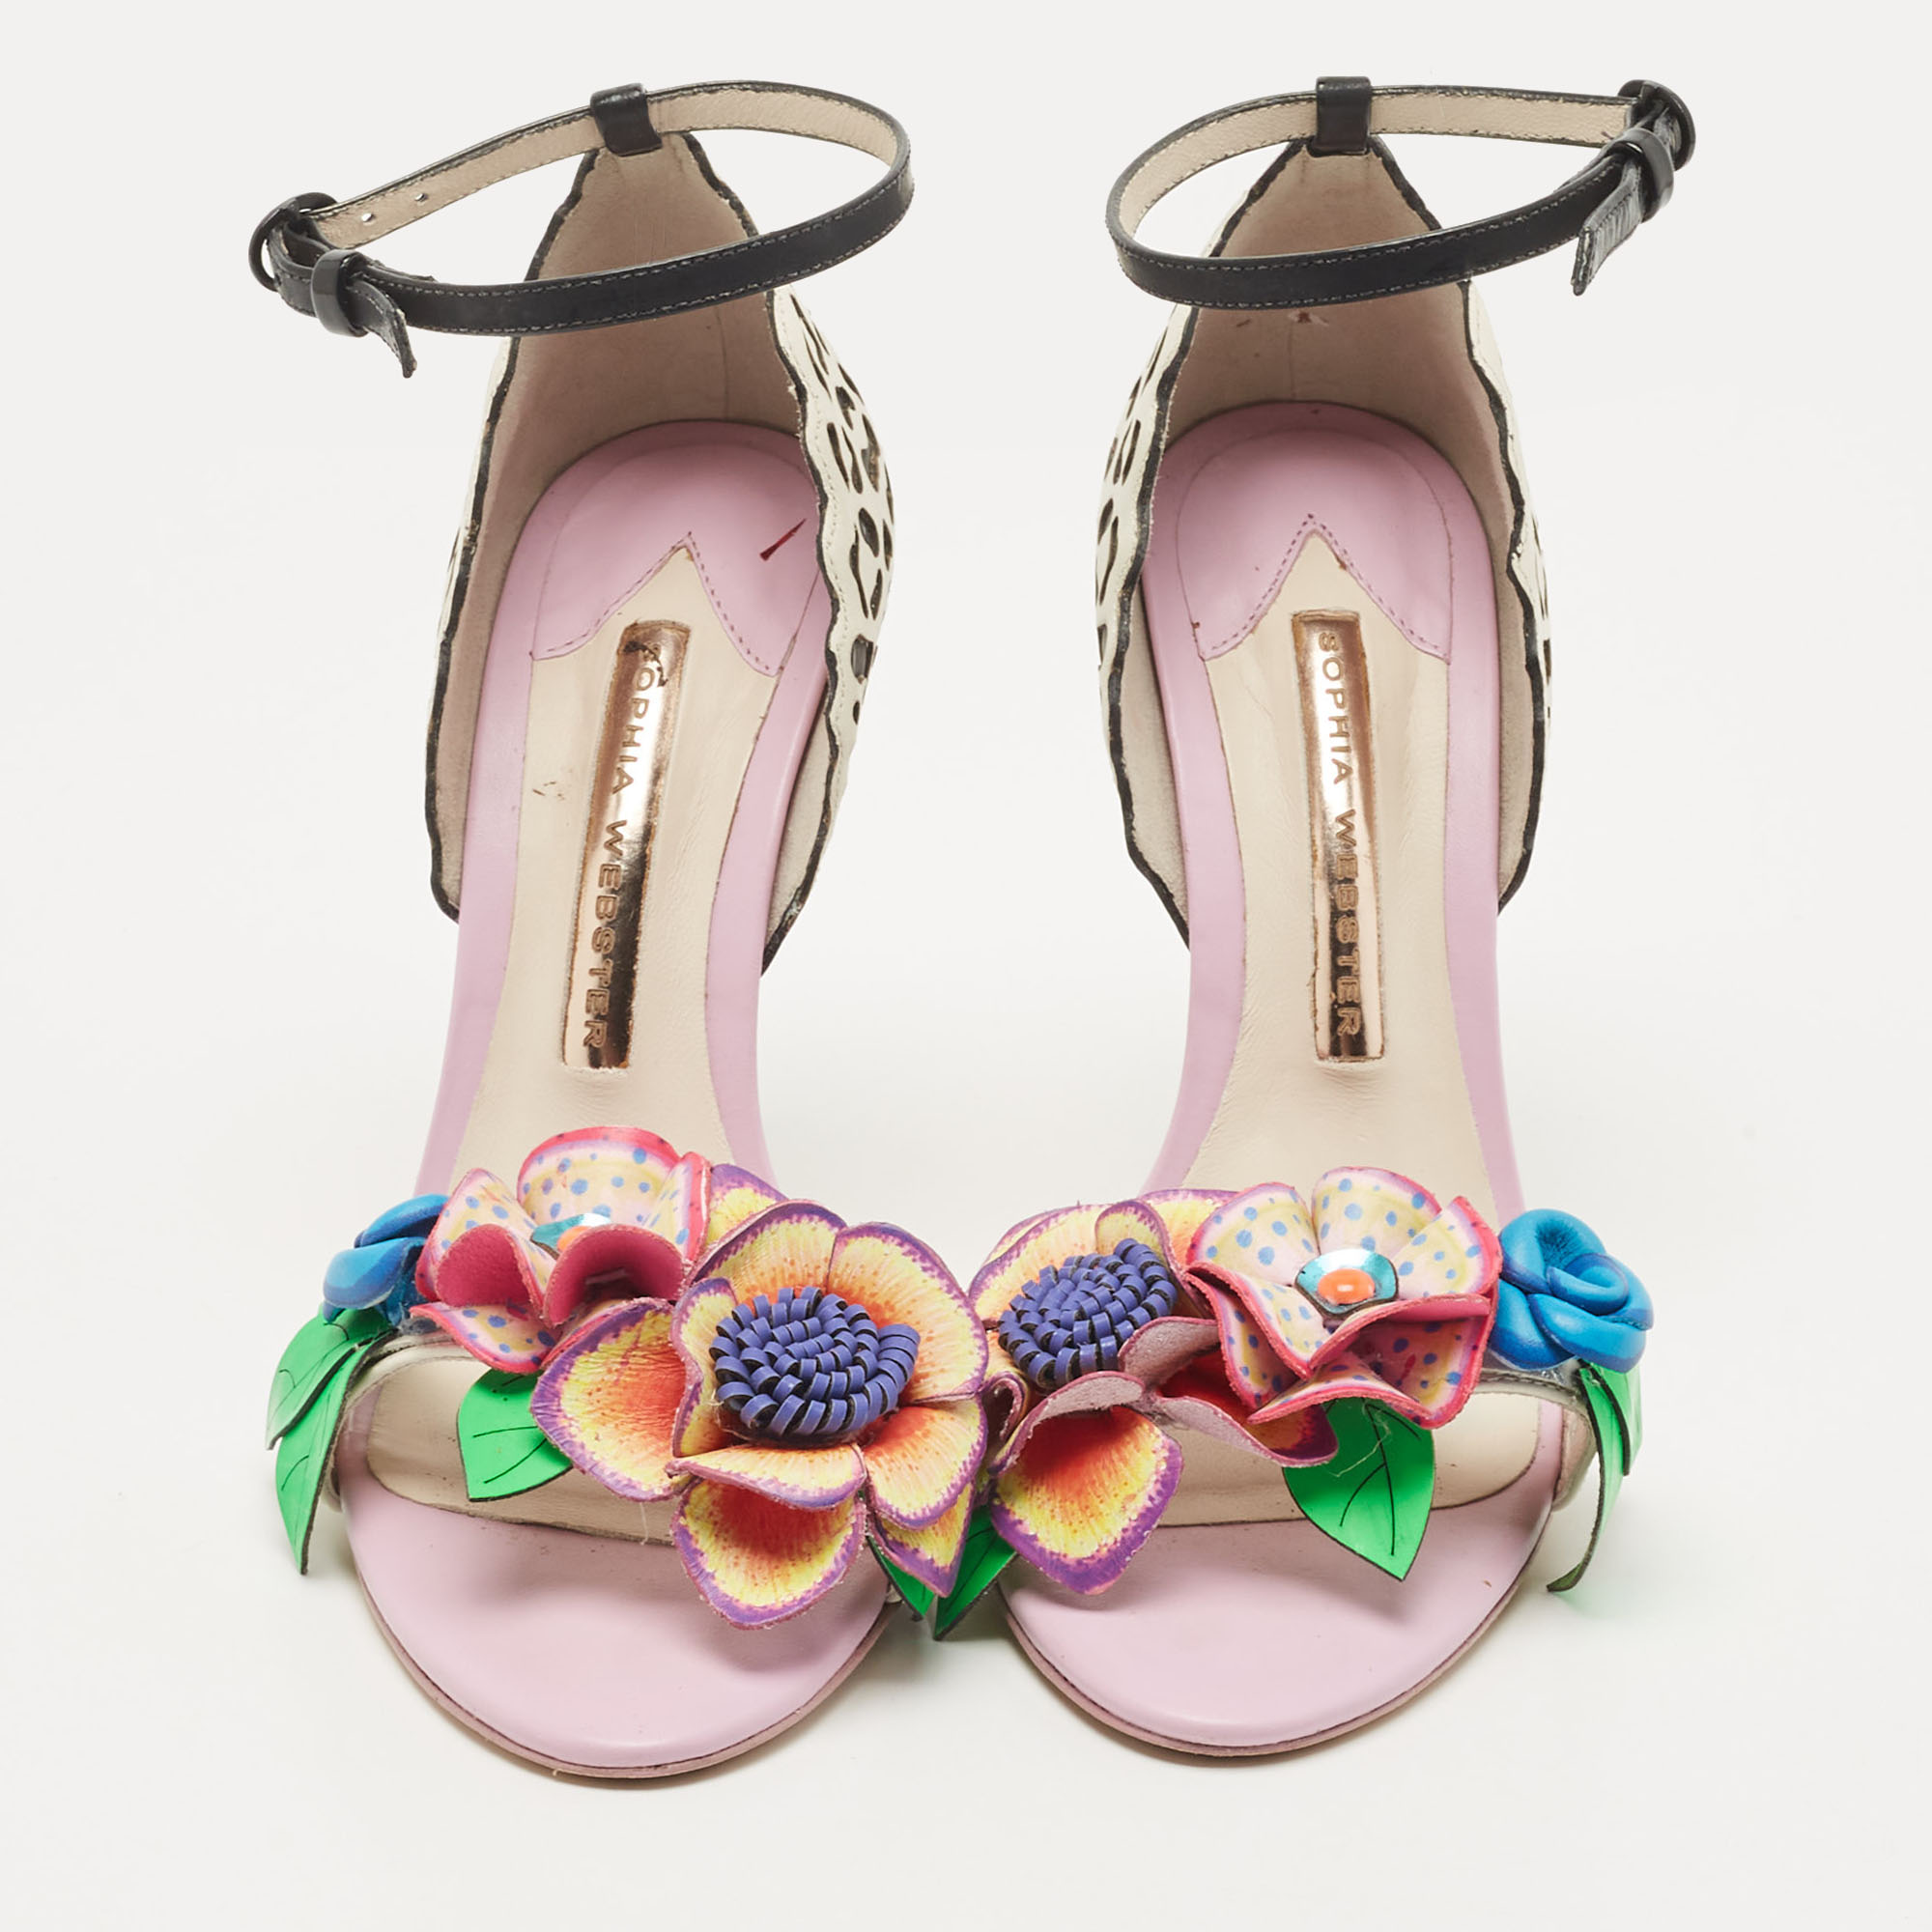 Sophia Webster Multicolor Patent Leather And Leather Lilico Floral Embellished Sandals Size 36.5